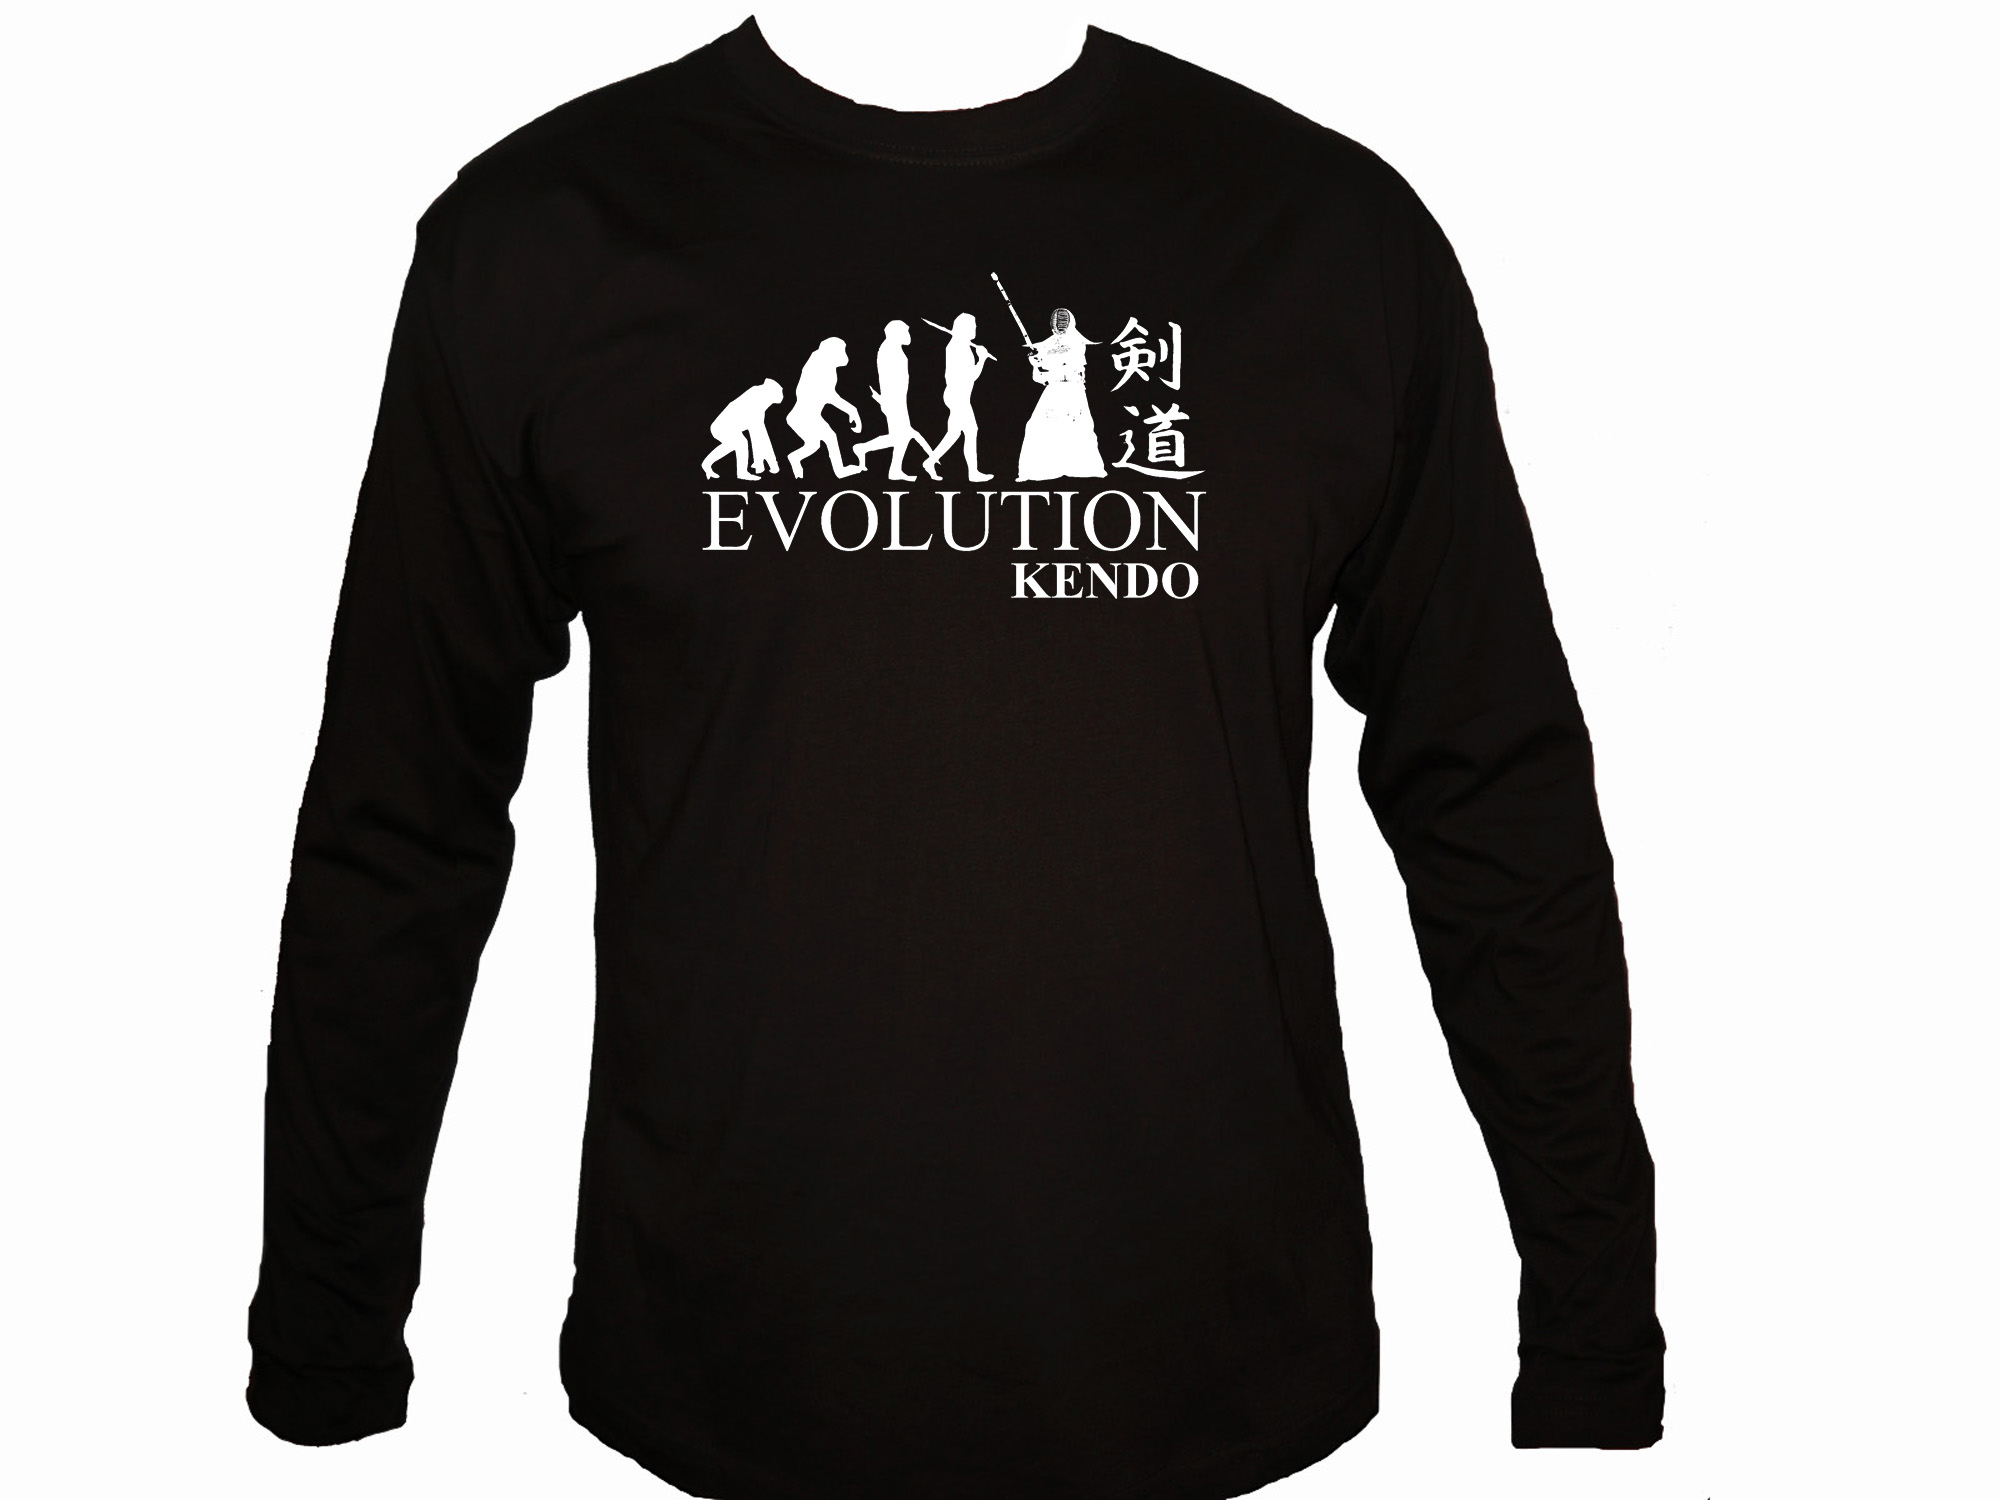 Evolution Kendo Japanese martial arts MMA sleeved t-shirt